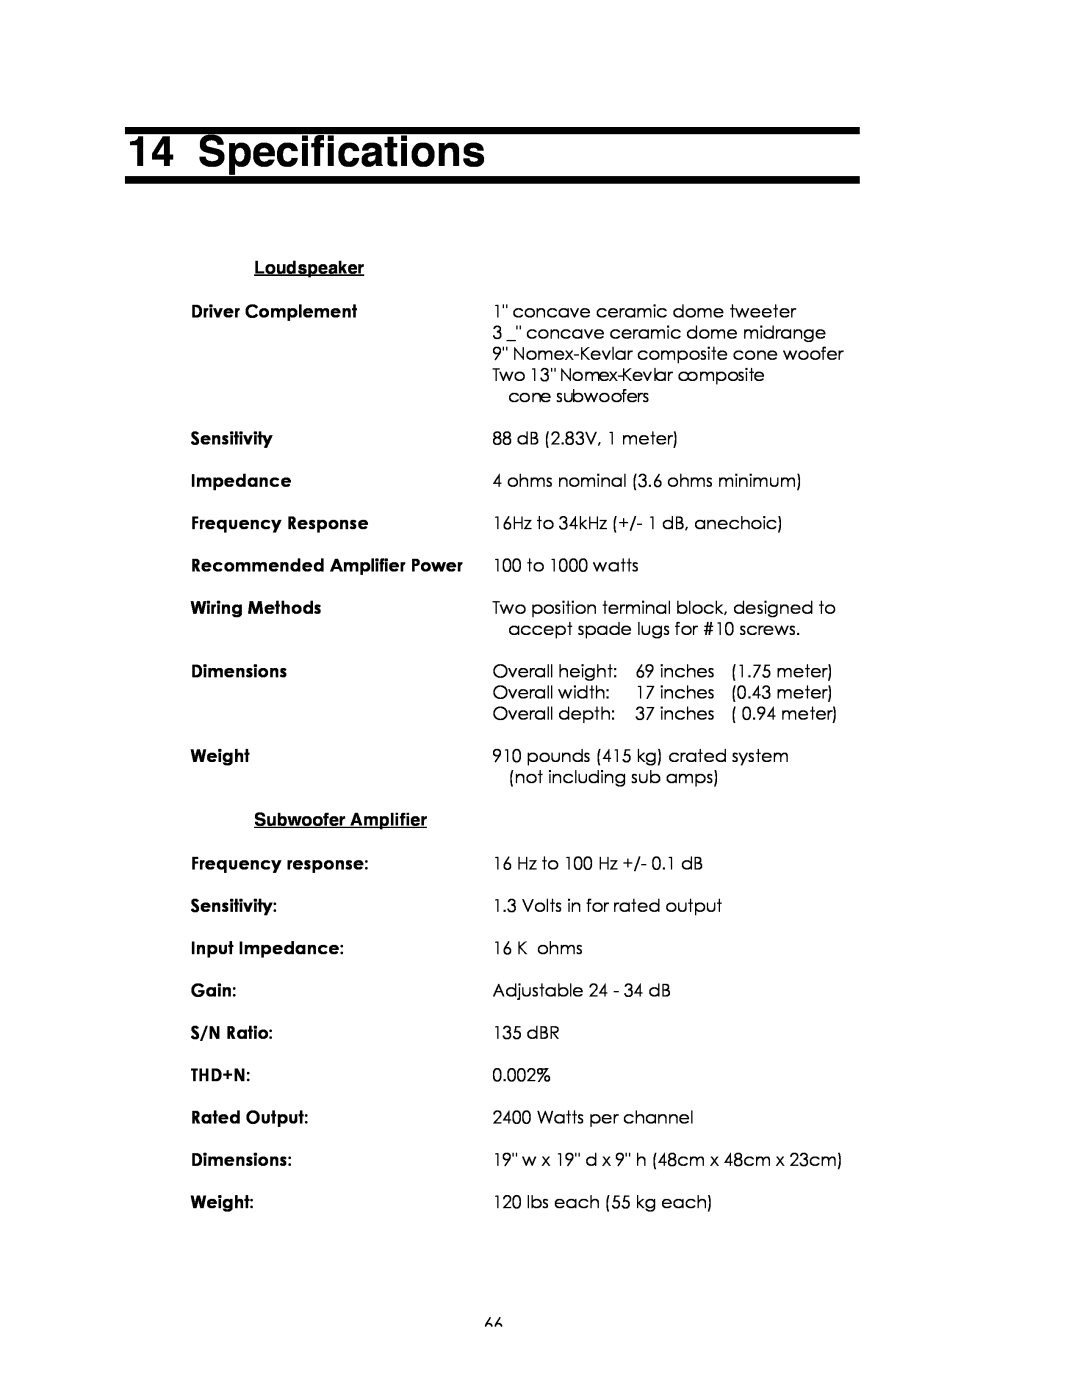 Avalon Acoustics Sentinel manual Specifications, Loudspeaker, Subwoofer Amplifier 